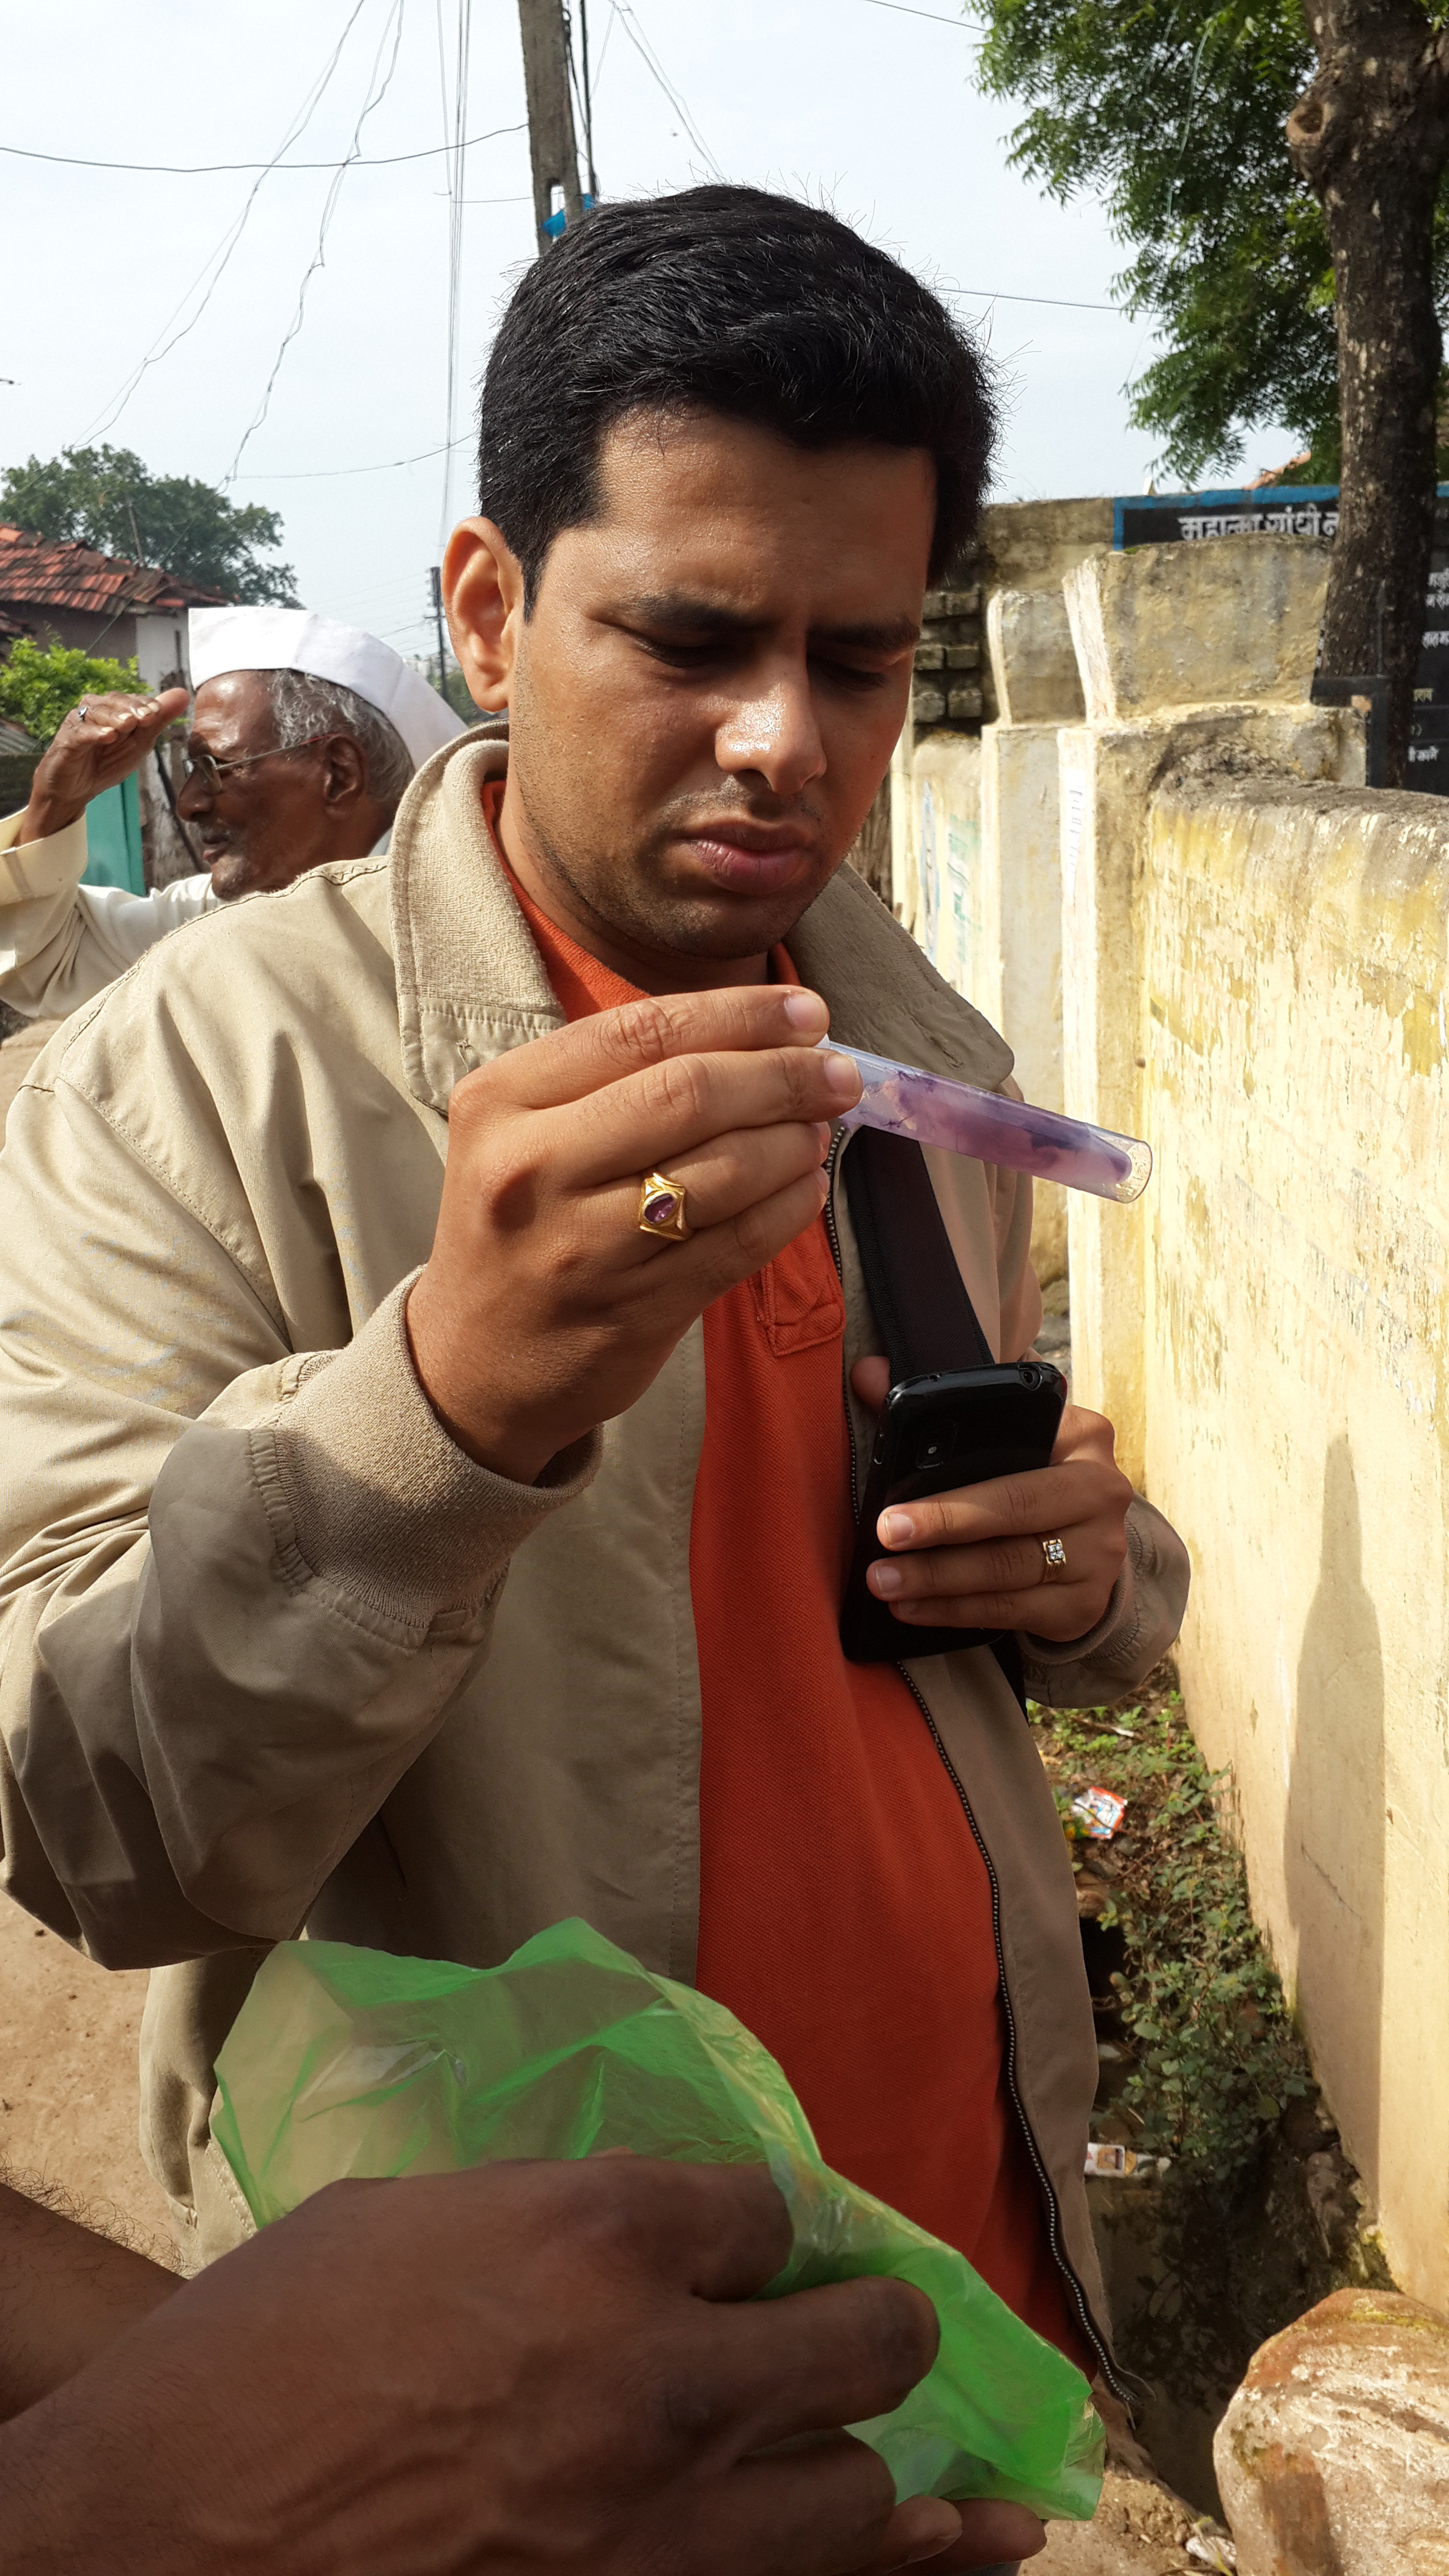 Pranav Nagarnaik of NEERI inspects a returned E. coli test kit whose color indicates the presence of bacteria. (Photo: Andy Loo)